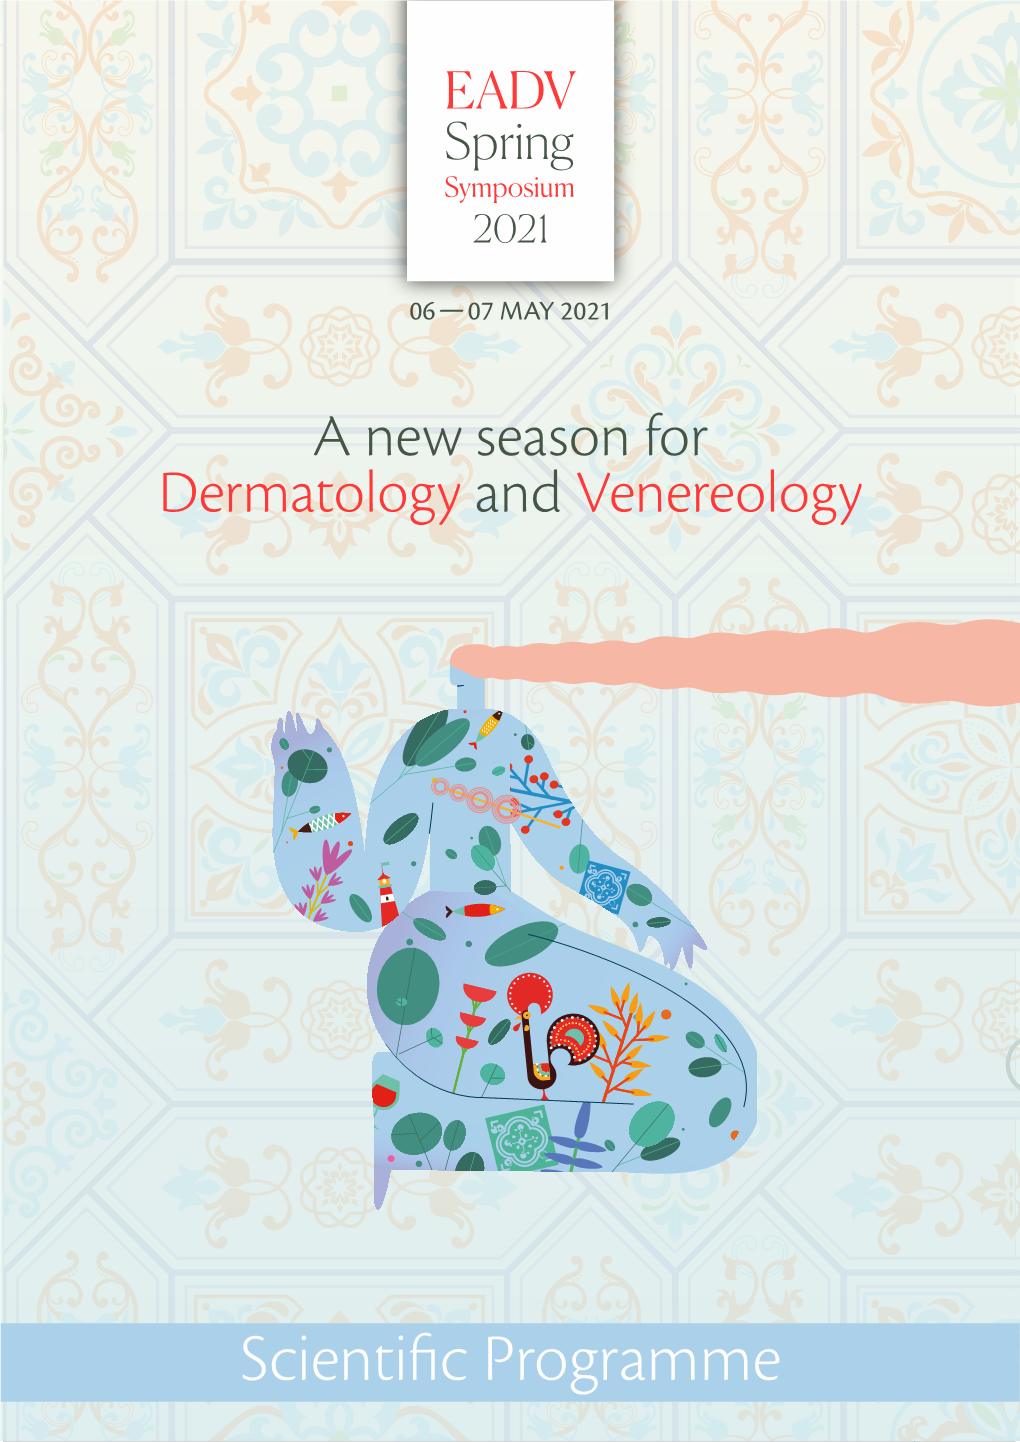 Dermatology and Venereology